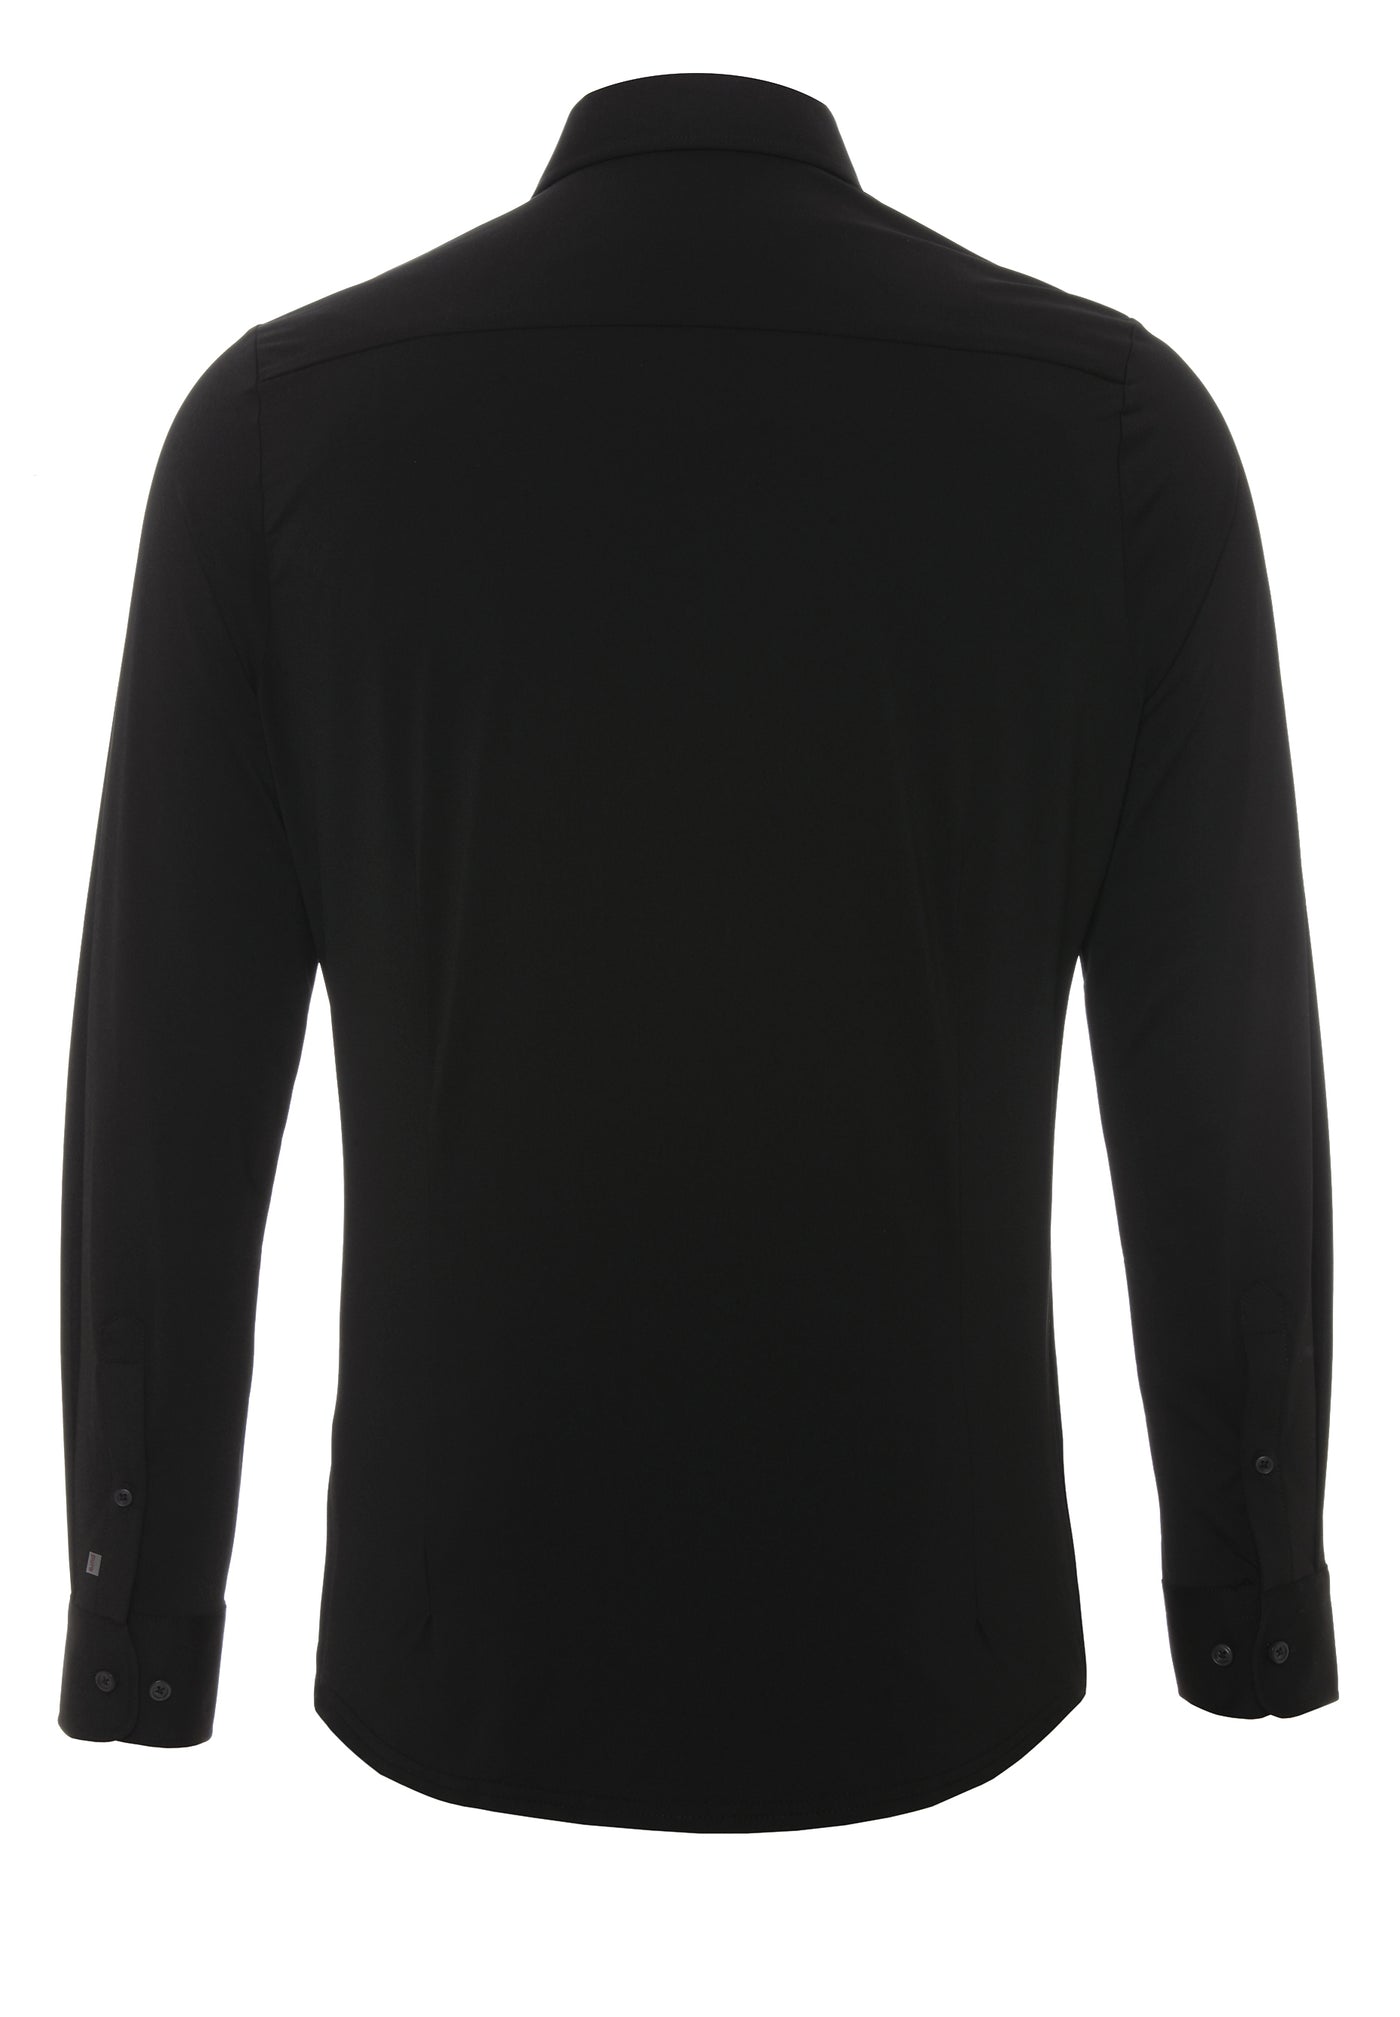 4030-21750 - Functional shirt - black